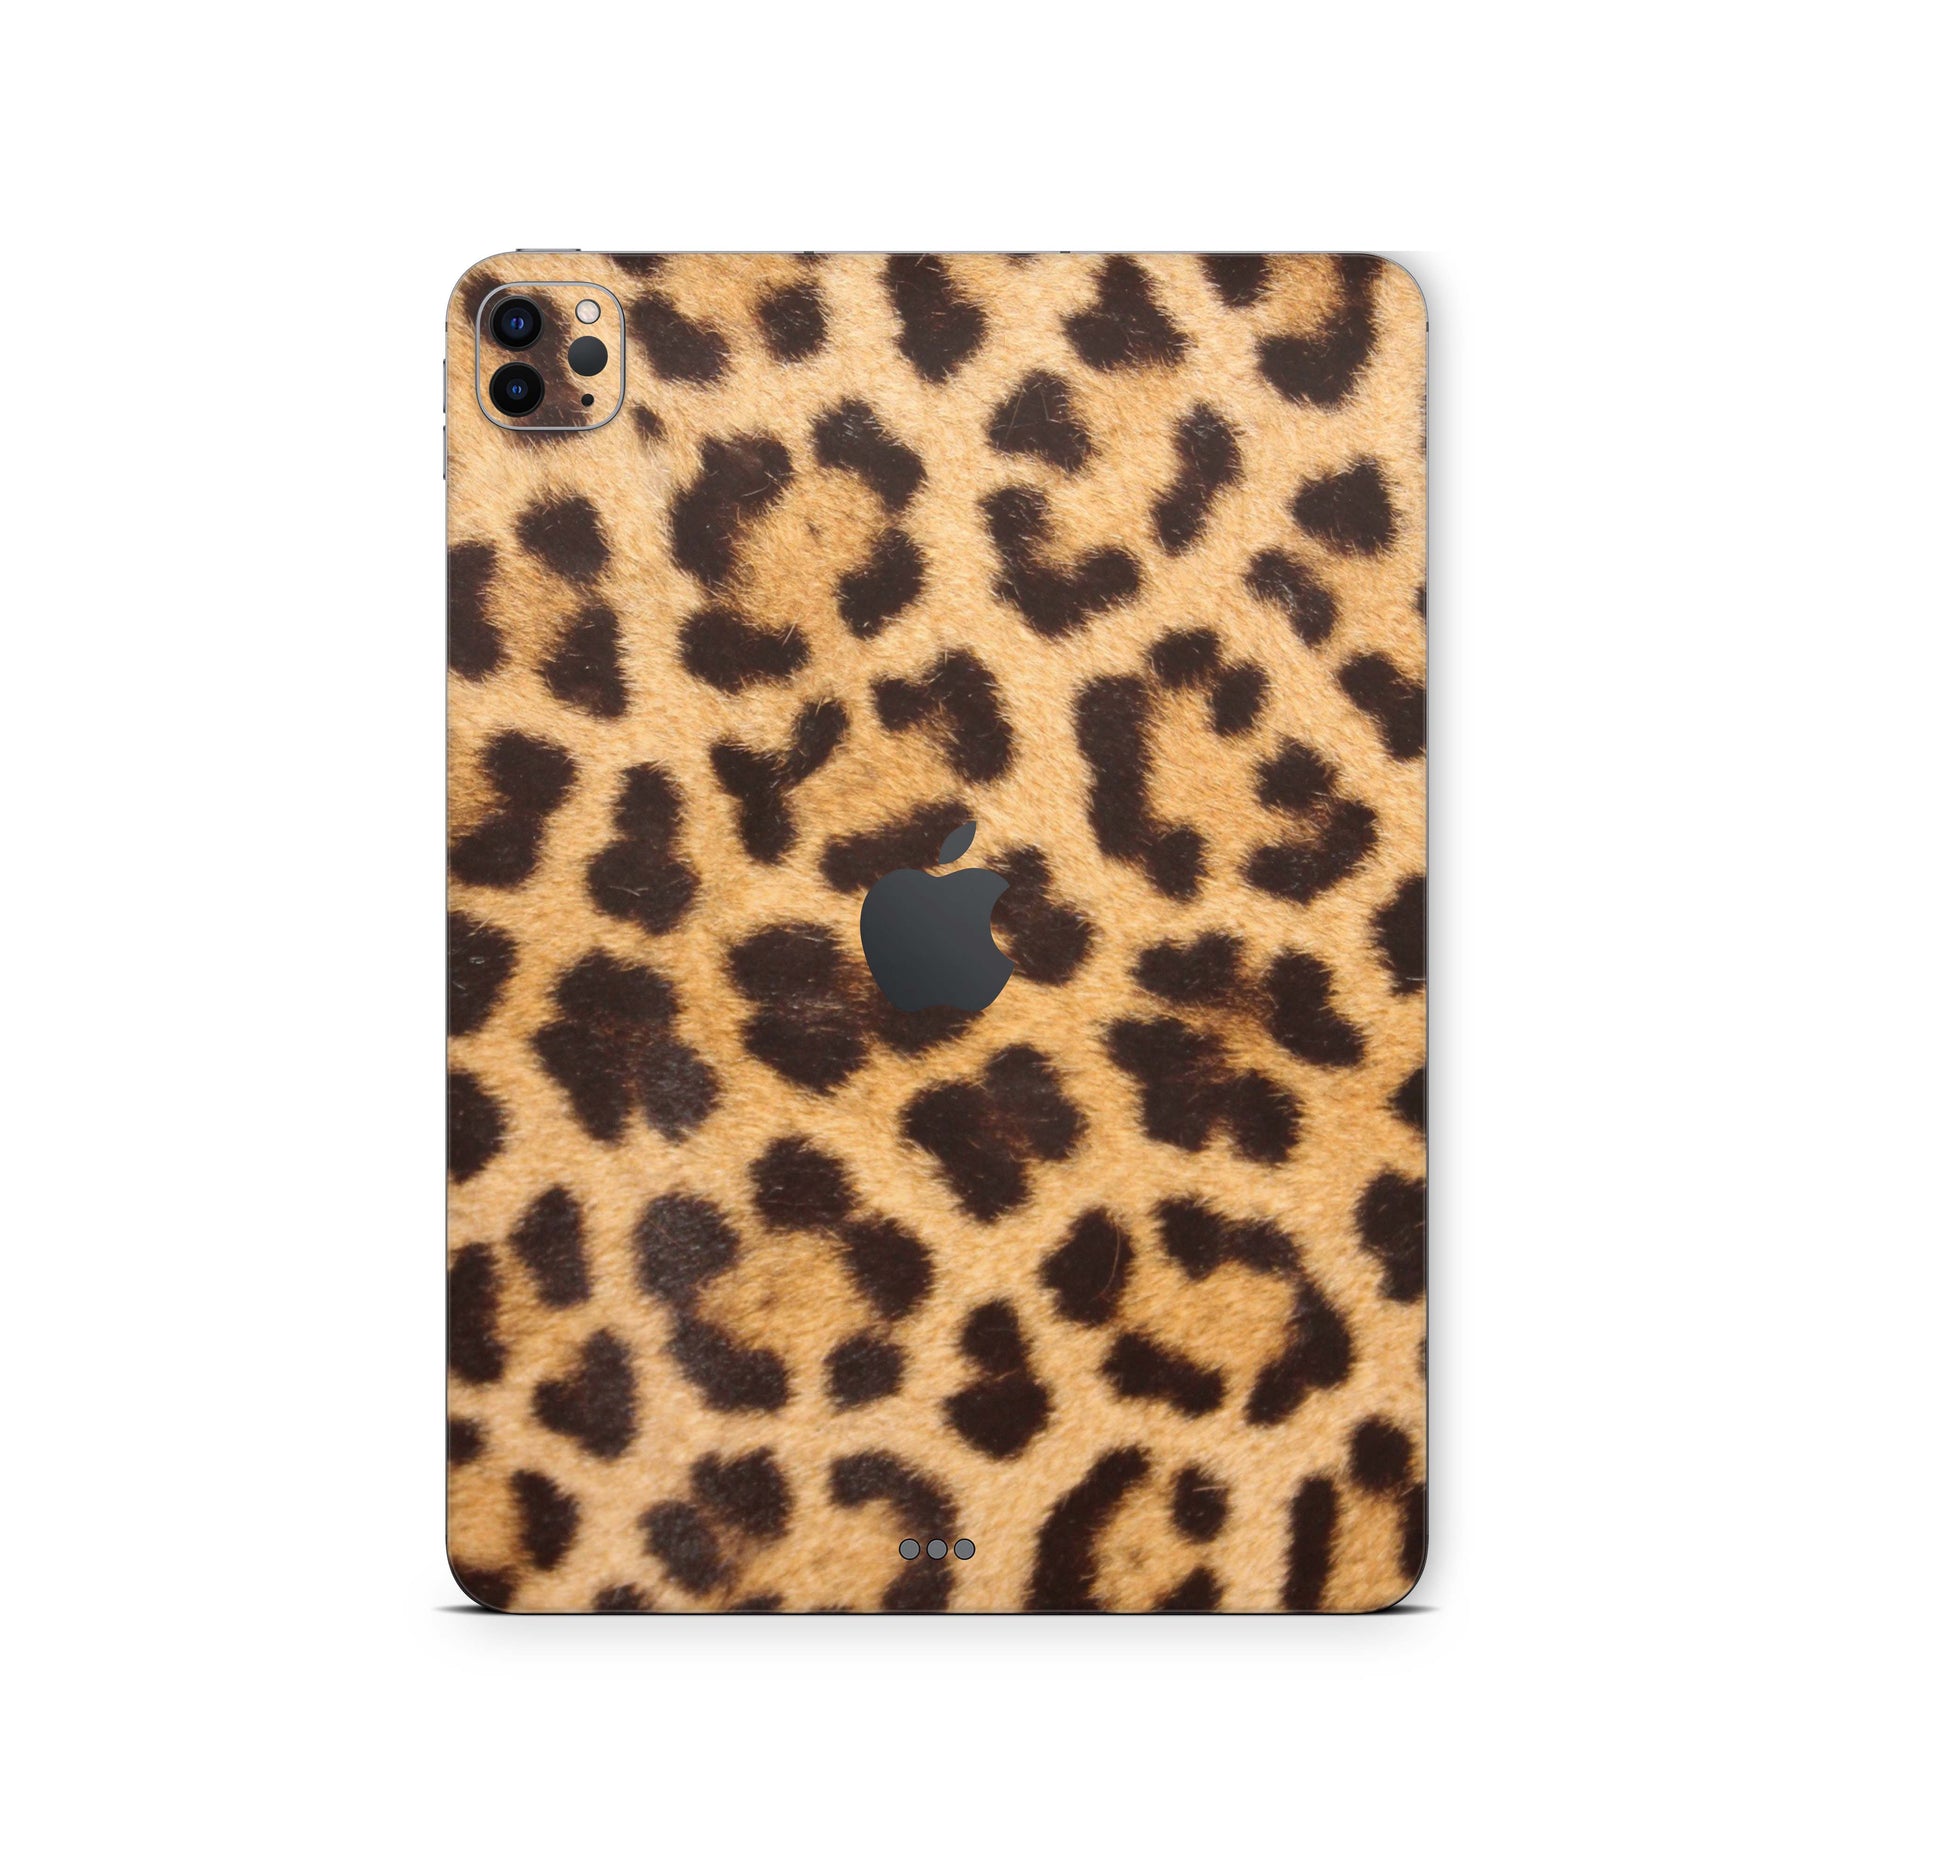 iPad Pro Skin 11" 3.Generation M1 2021 Design Cover Folie Vinyl Skins & Wraps Aufkleber Skins4u Leopardenfell  